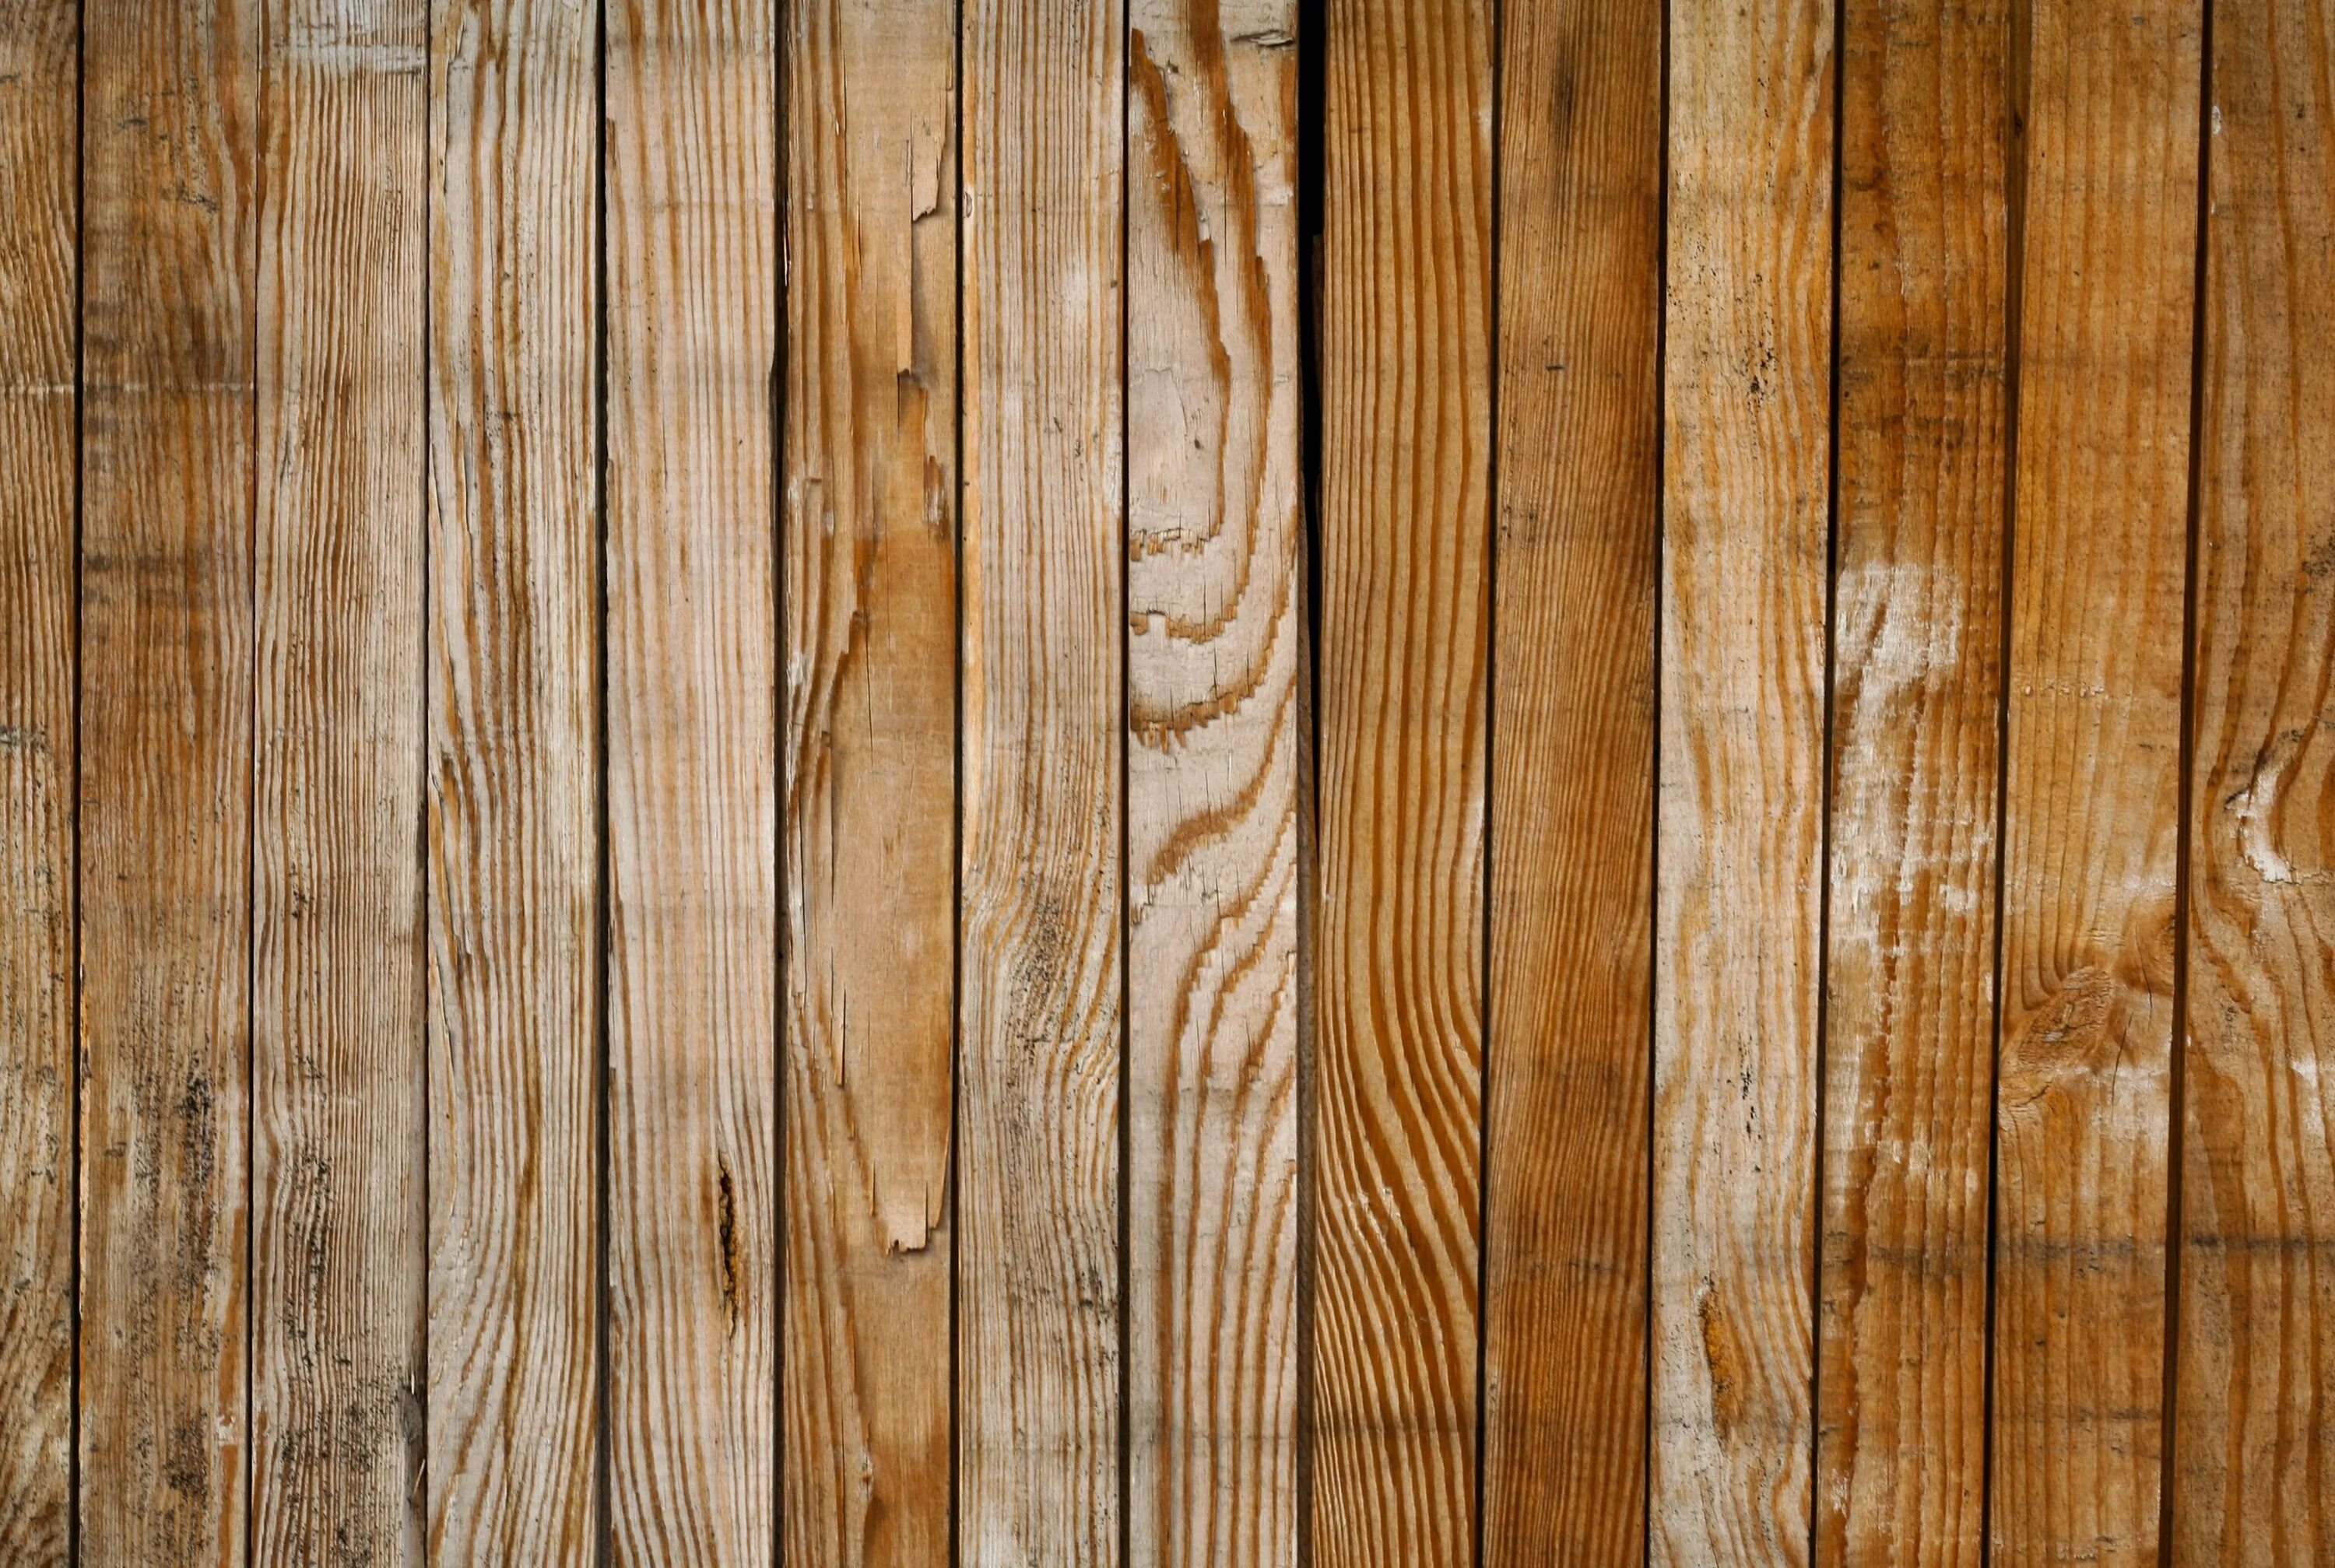 Wooden patterns. Фактура дерева. Деревянная доска. Деревянный фон. Деревянная текстура.